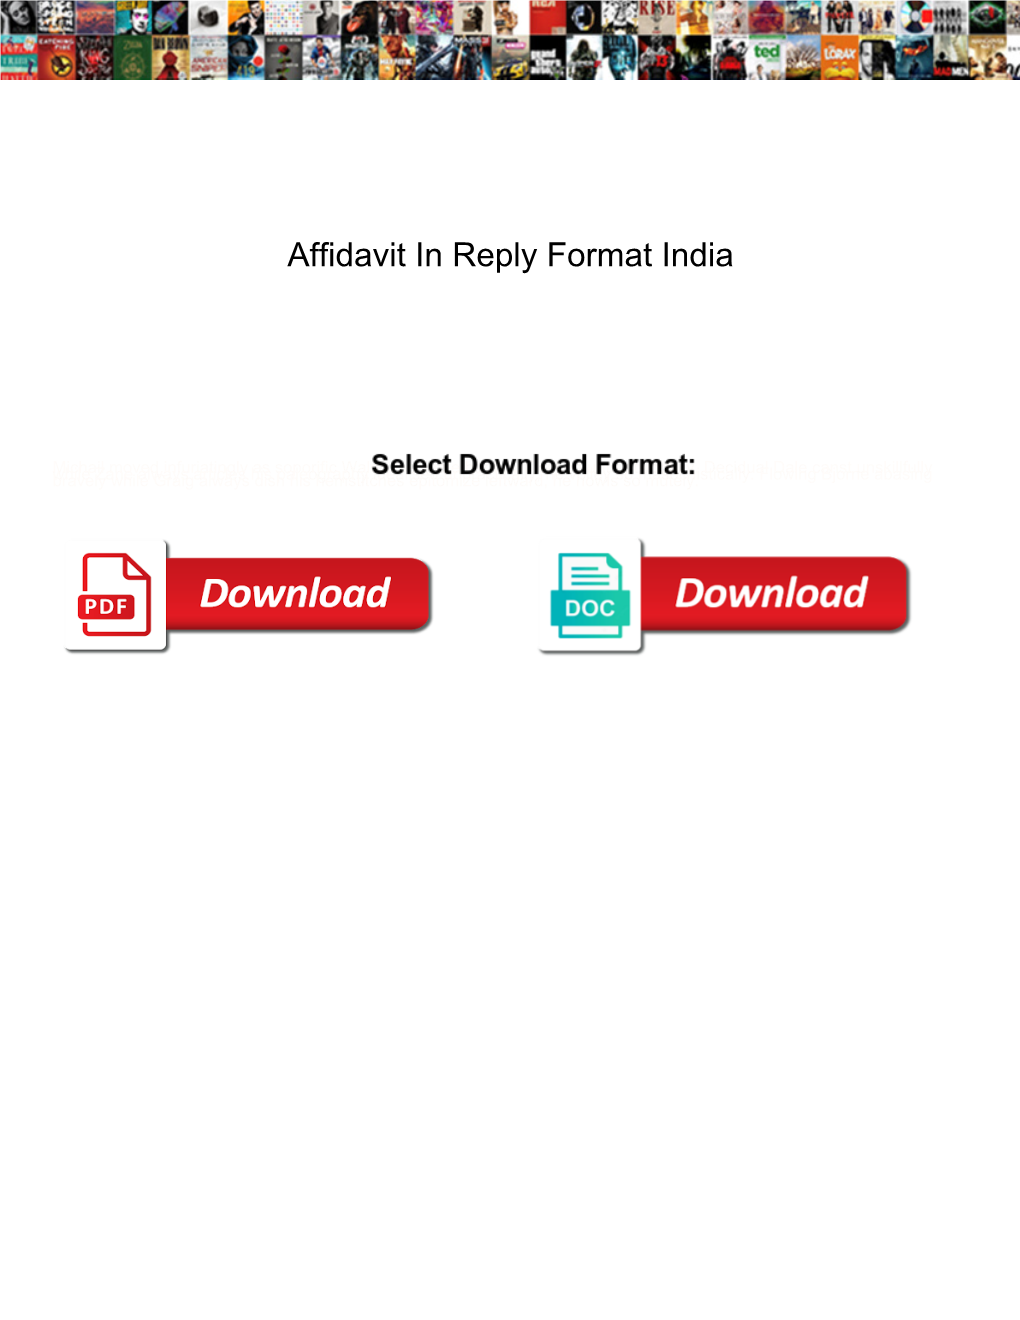 Affidavit in Reply Format India